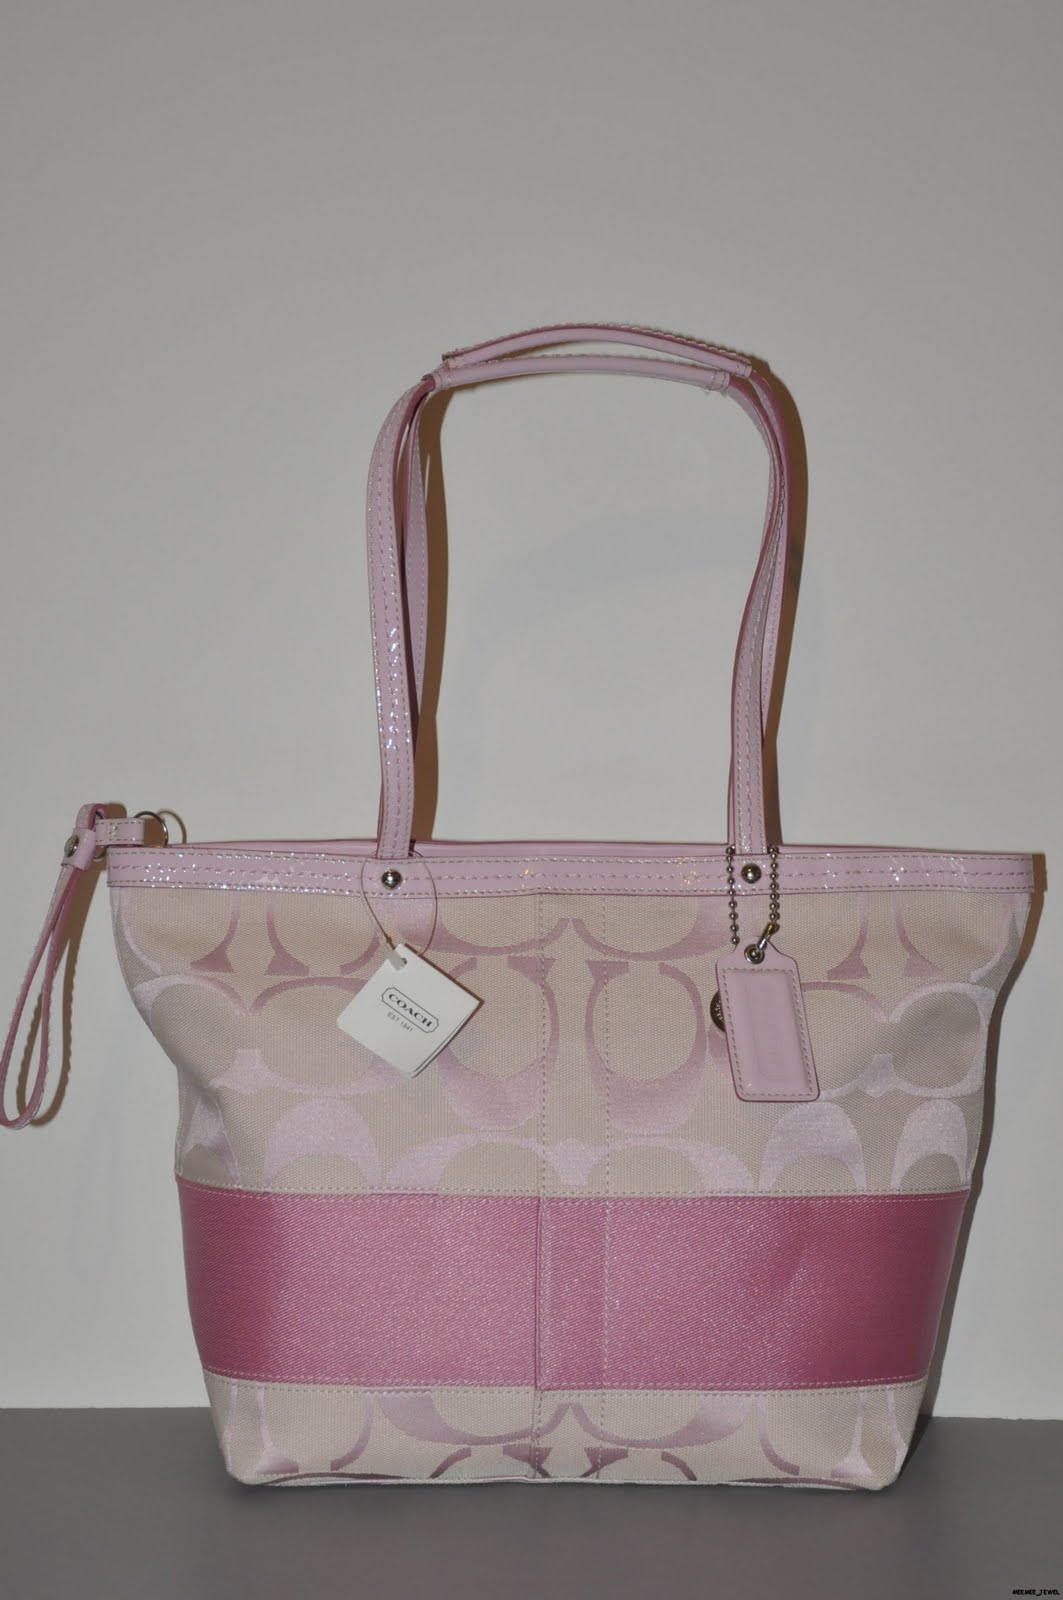 GreenApple4sale: Authentic Branded Bags: Coach Signature Stripe Light ...